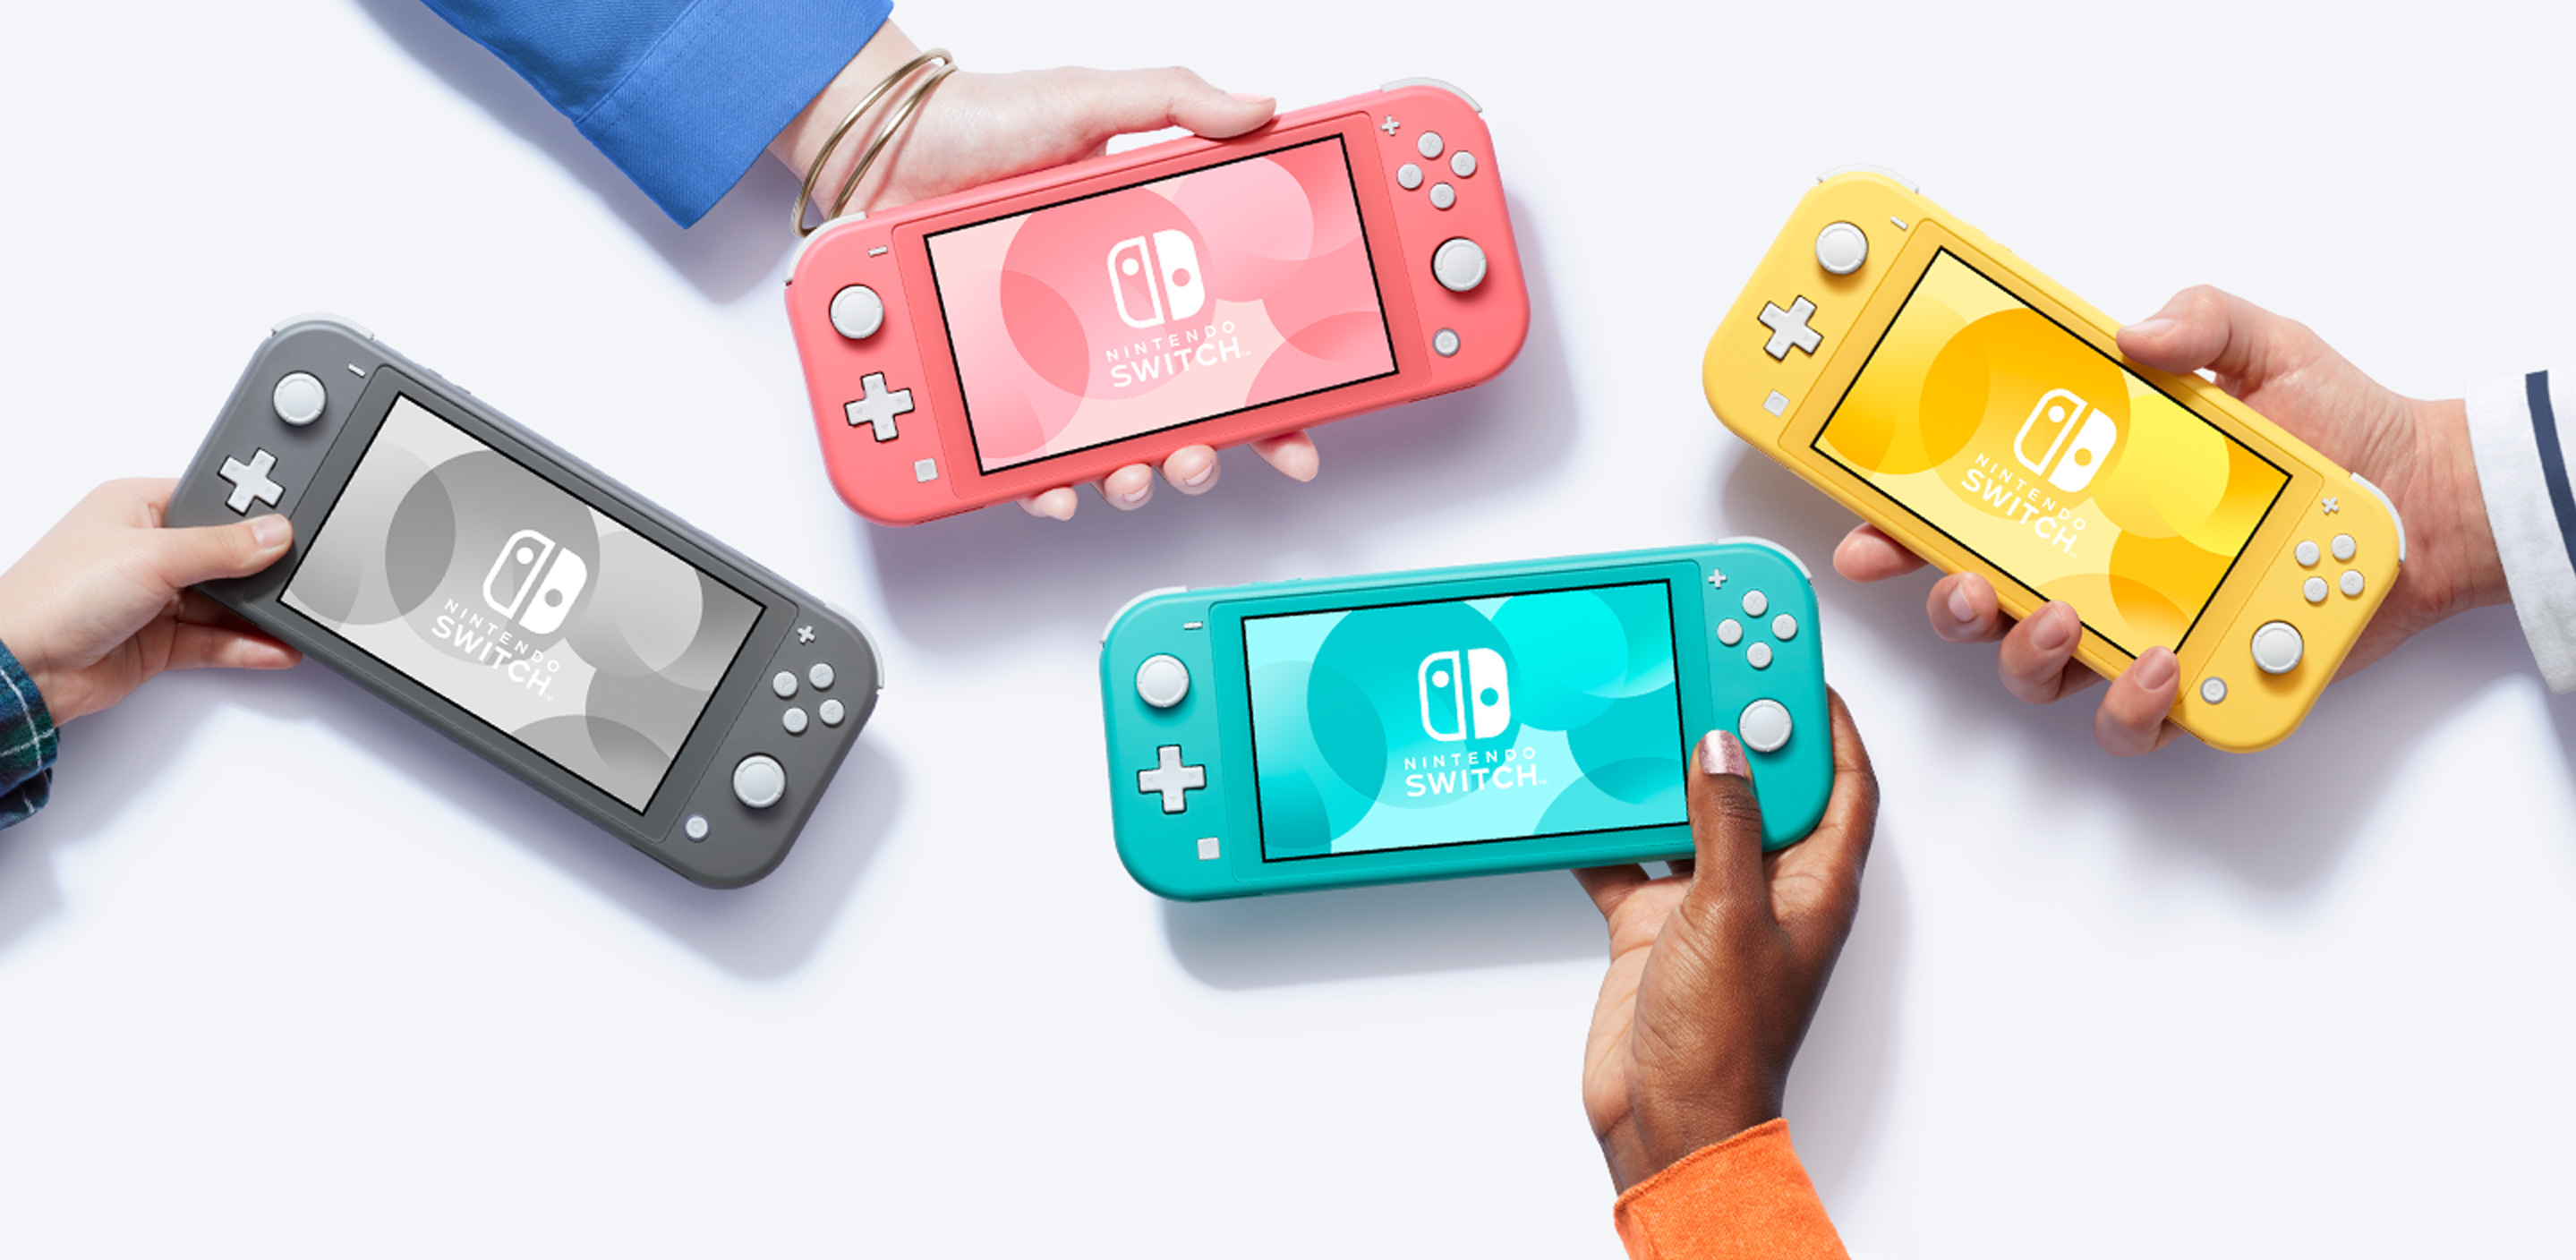 Nintendo Switch Lite | 任天堂